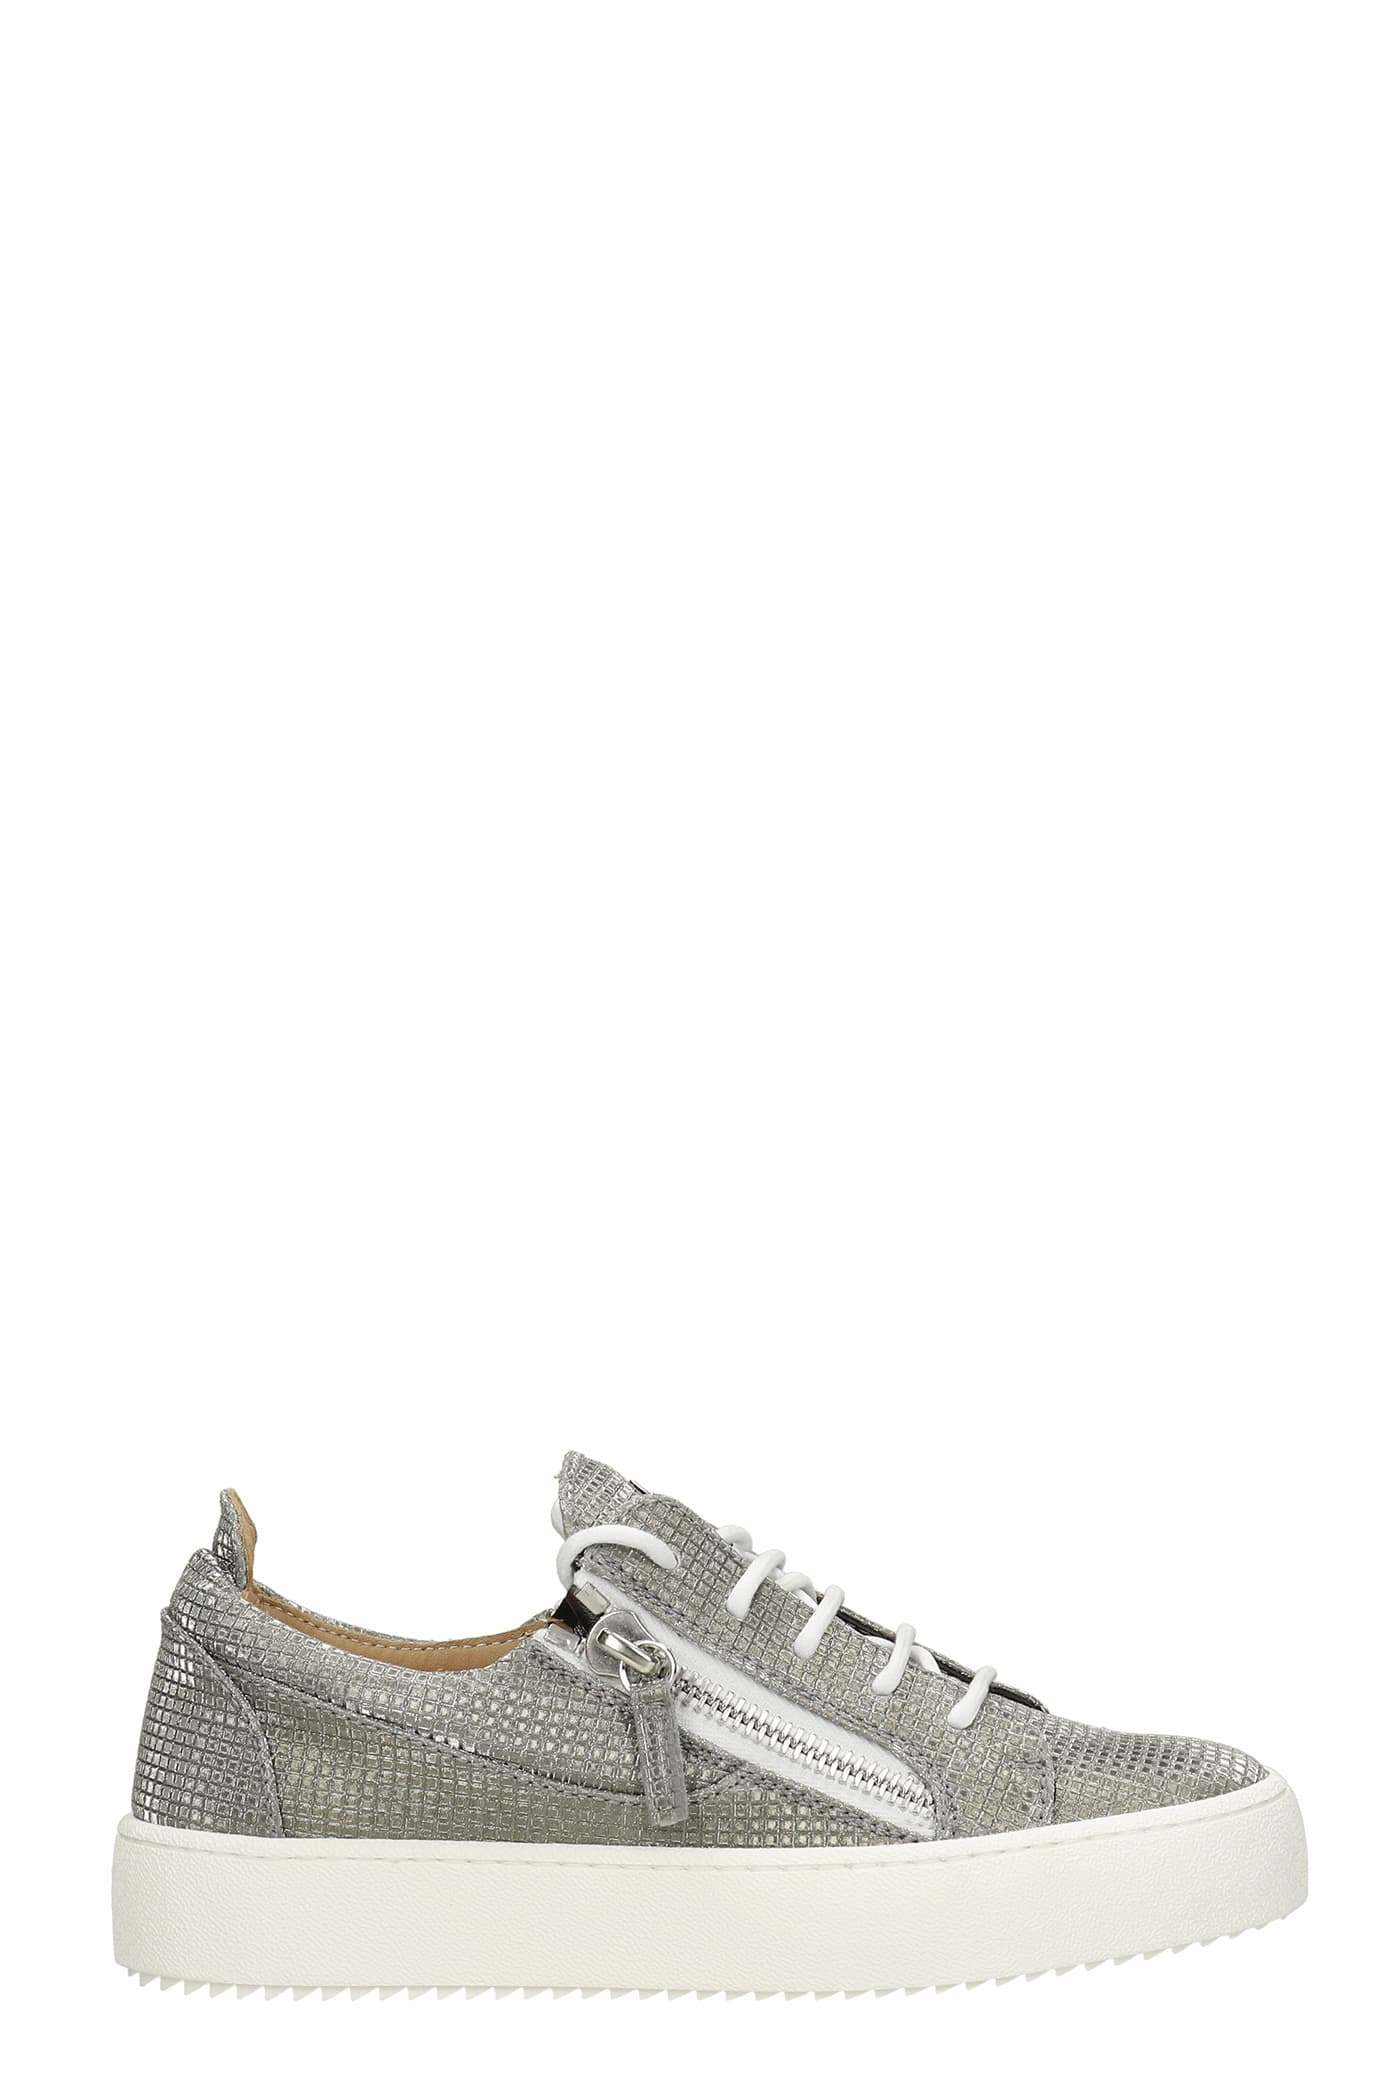 Giuseppe Zanotti Frankie Sneakers In Silver Leather